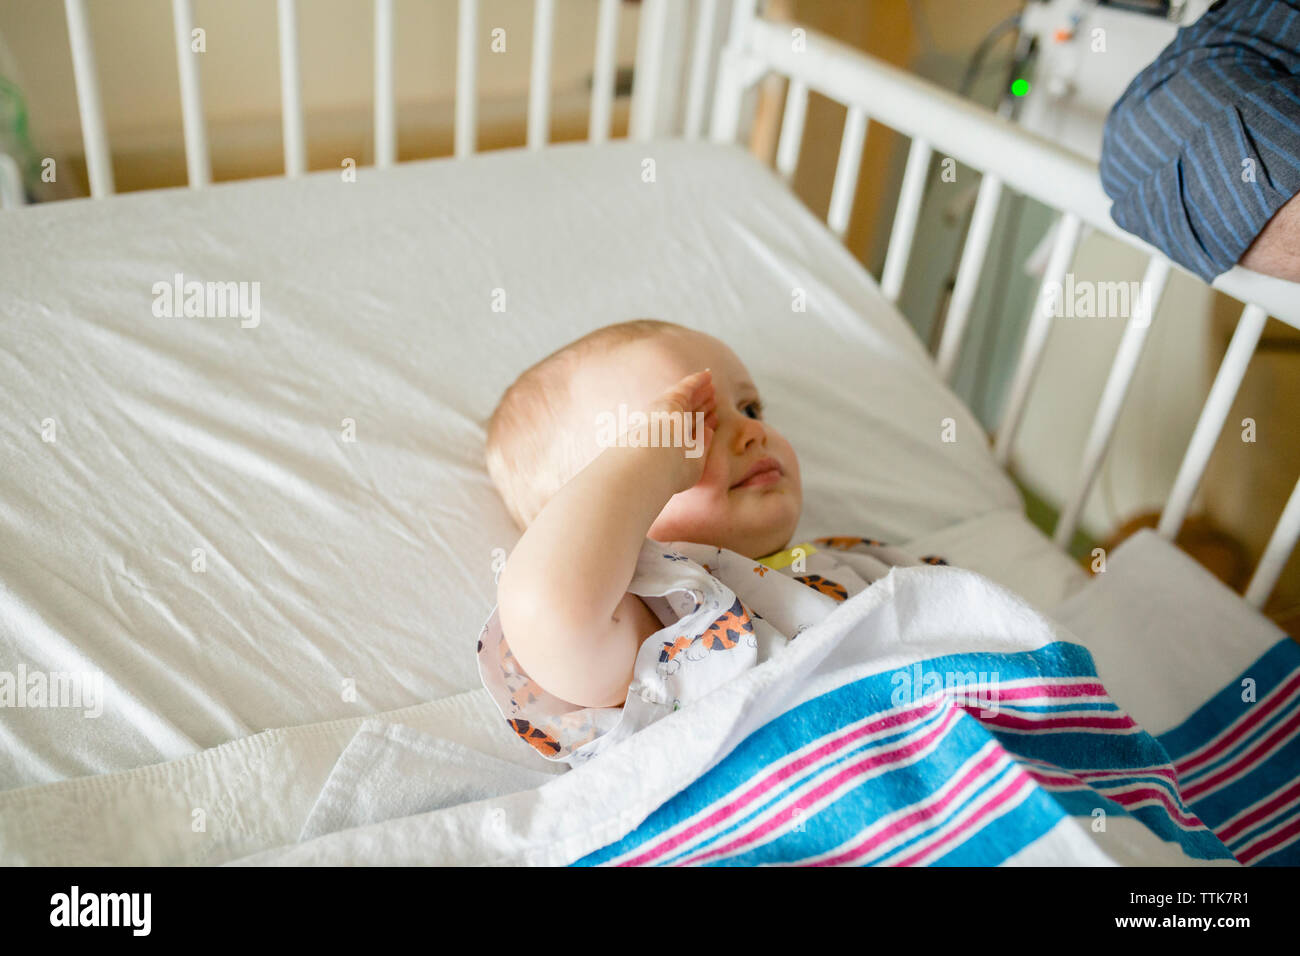 Sick baby boy rubbing eye while lying in hospital crib Stock Photo